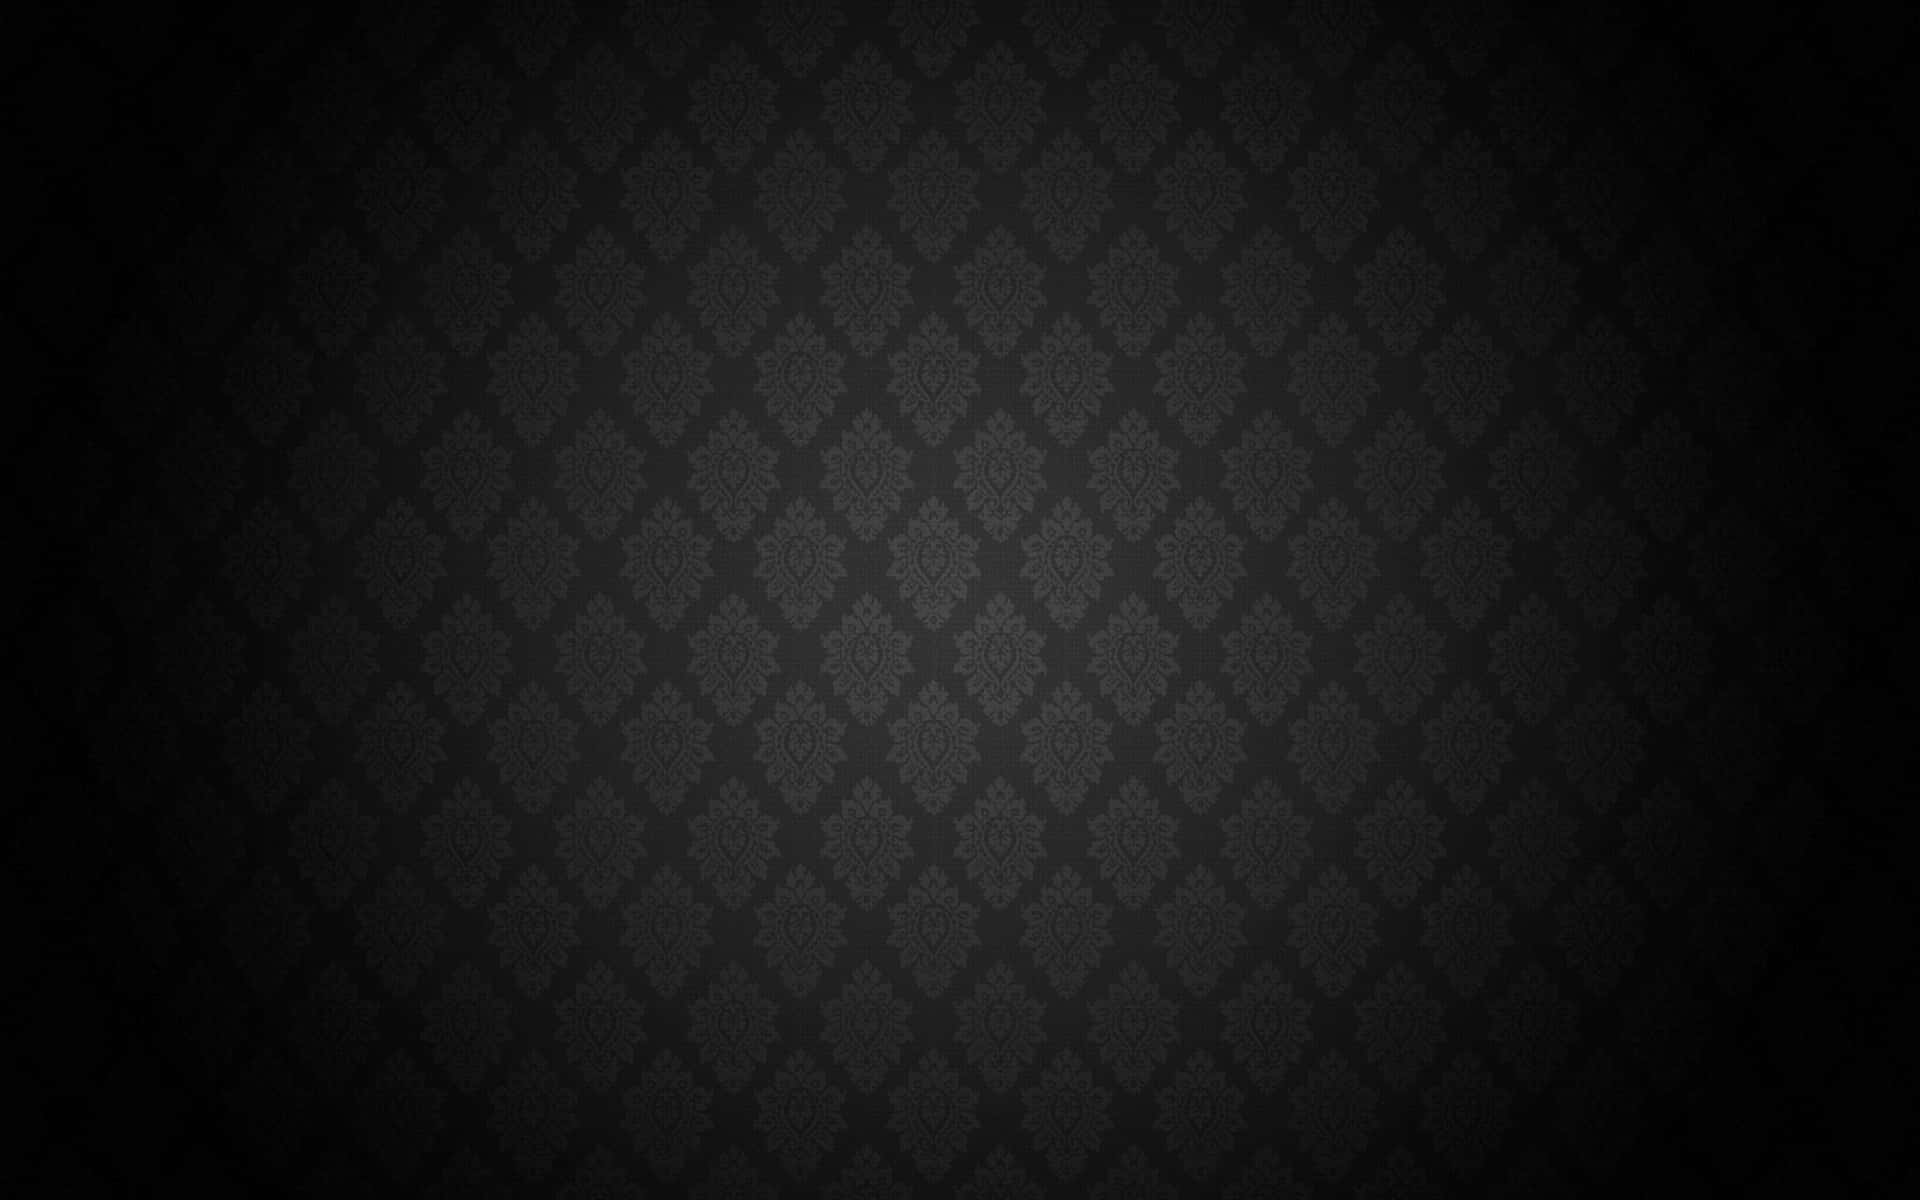 A Black Wallpaper With A Diamond Pattern